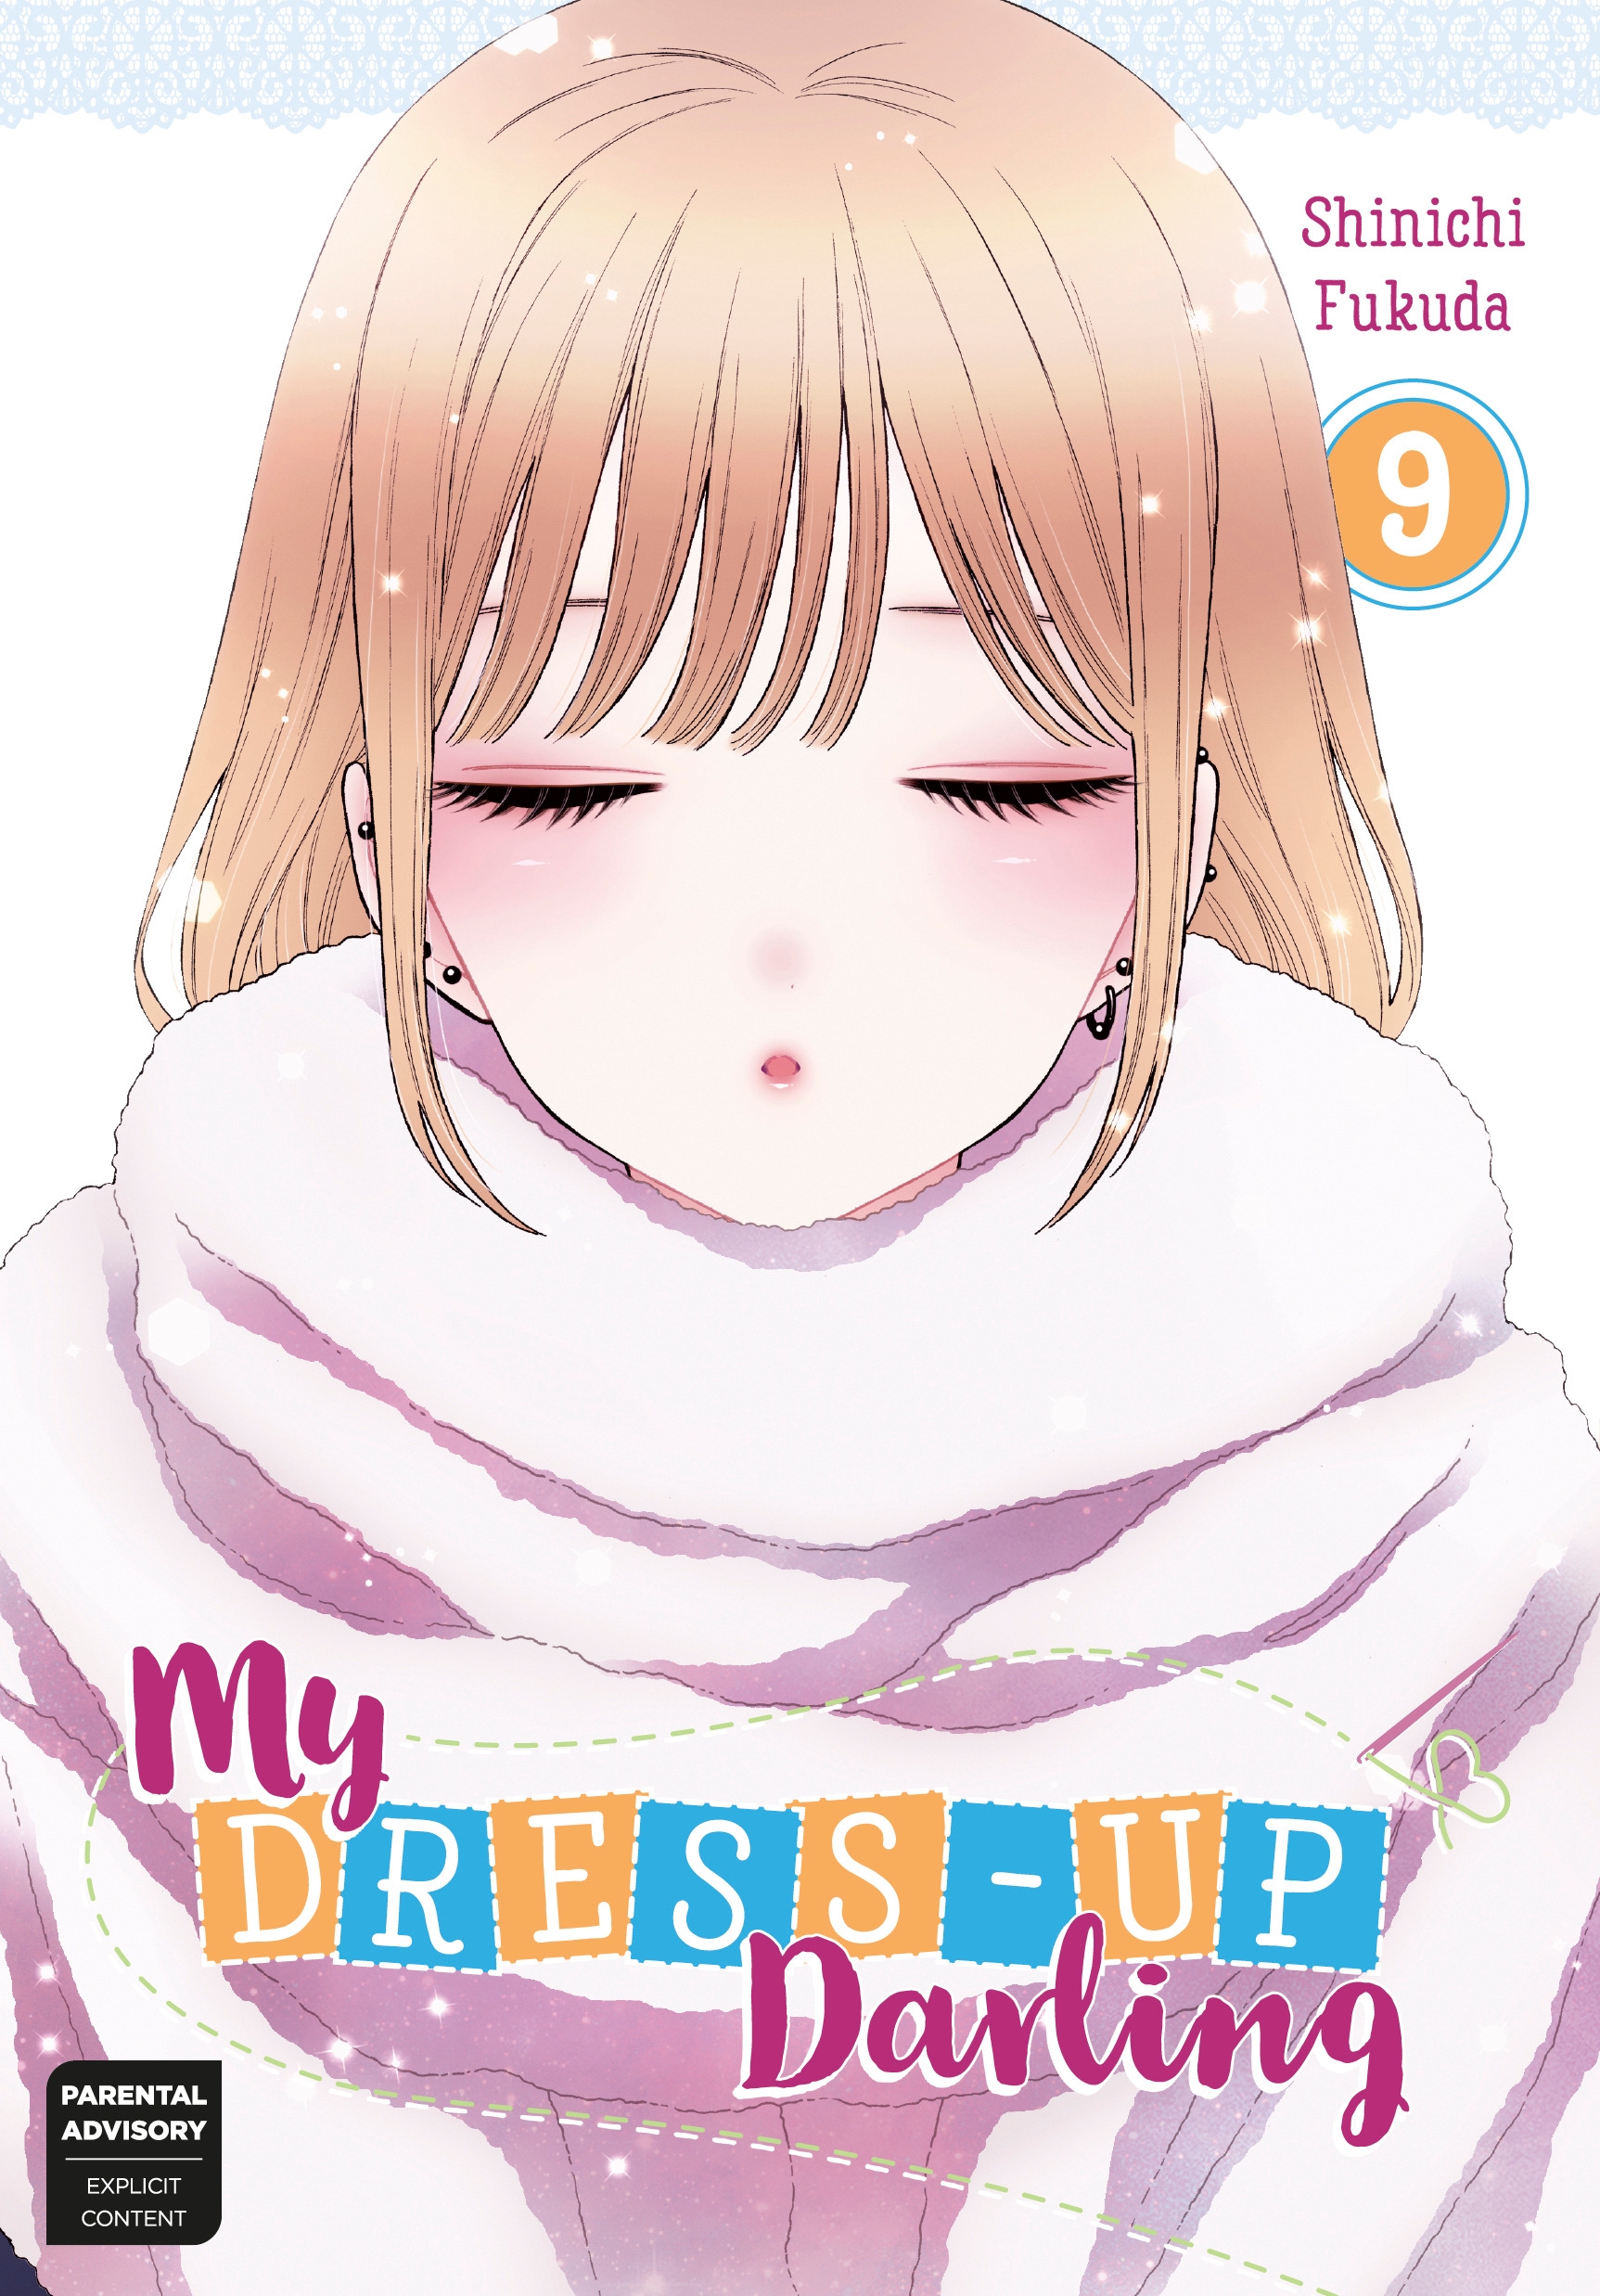 Shinichi Fukuda's My Dress-Up Darling Manga Surpasses 5 Million Copies  Printed - Crunchyroll News